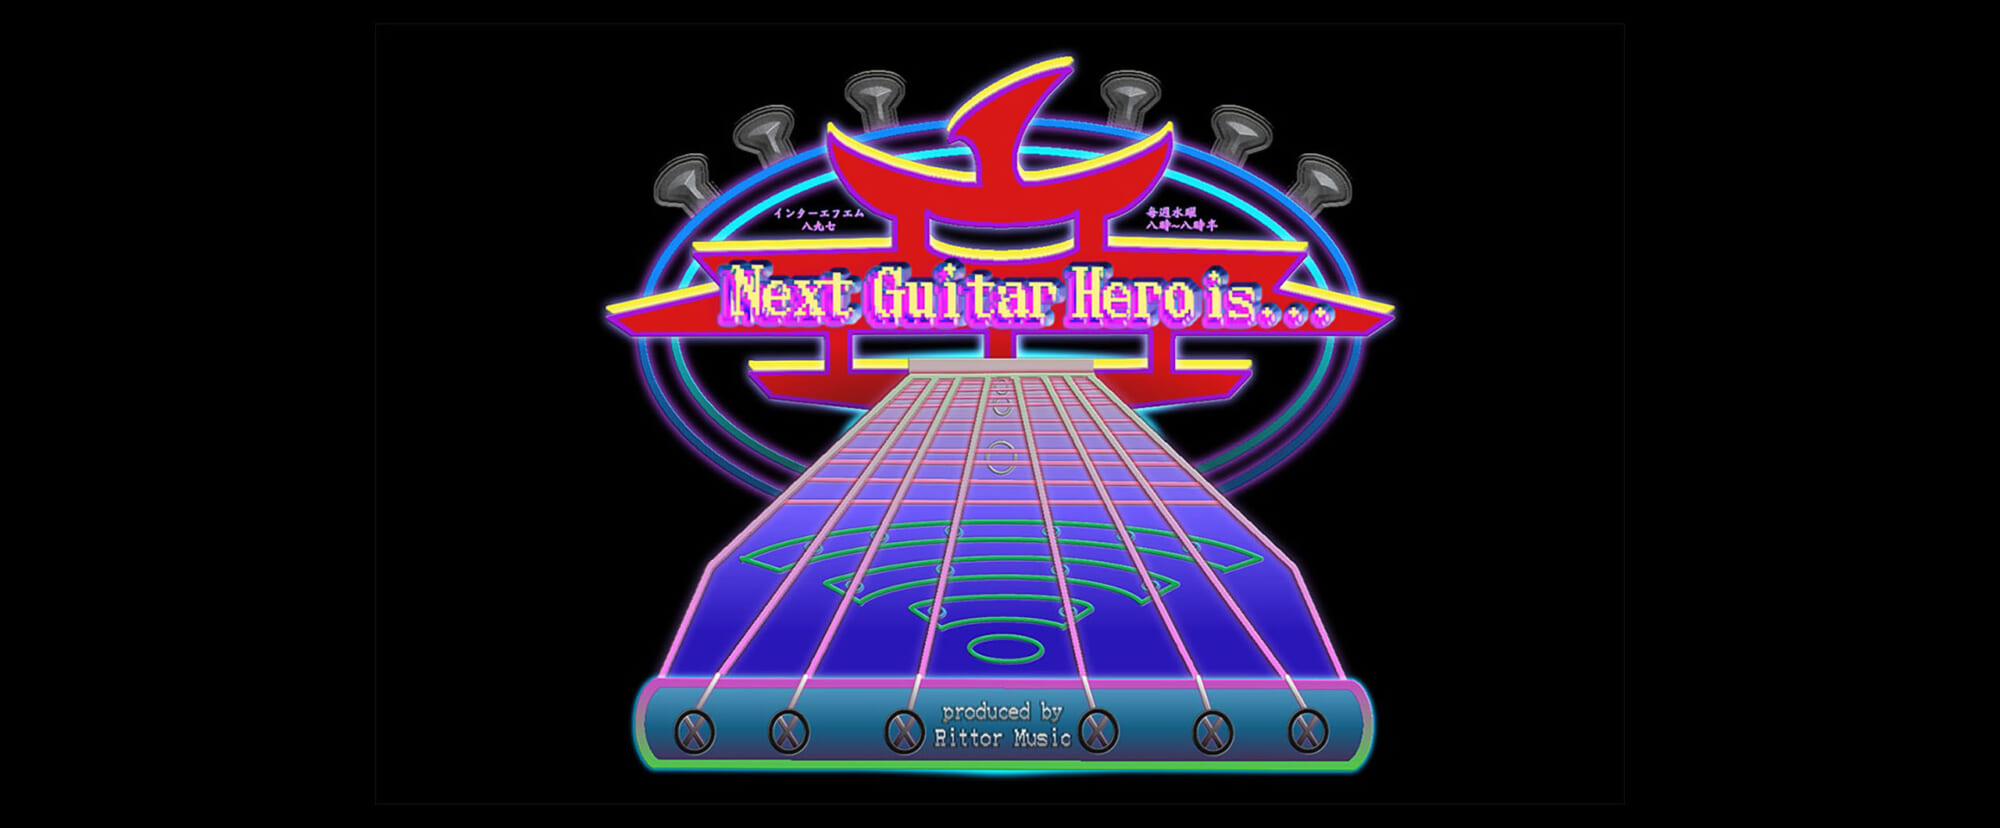 Reiと竹内アンナが語る「現代のギター・ヒーロー像」／『Next Guitar Hero is…』今週の放送内容